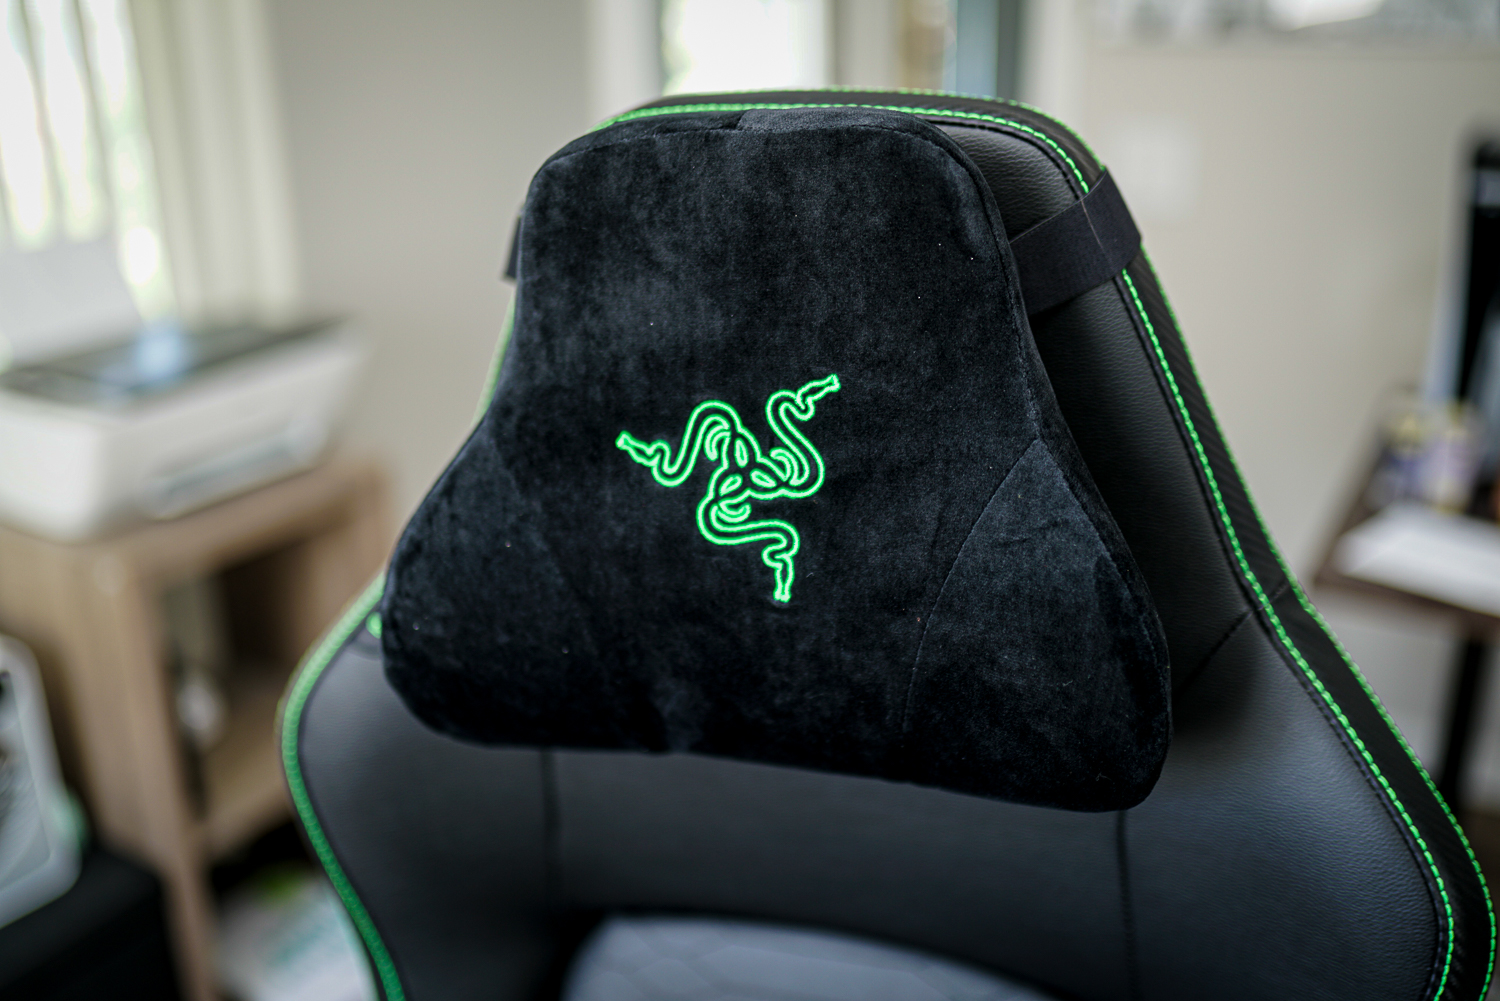 The memory foam pillow on the Razer Iskur V2 gaming chair.